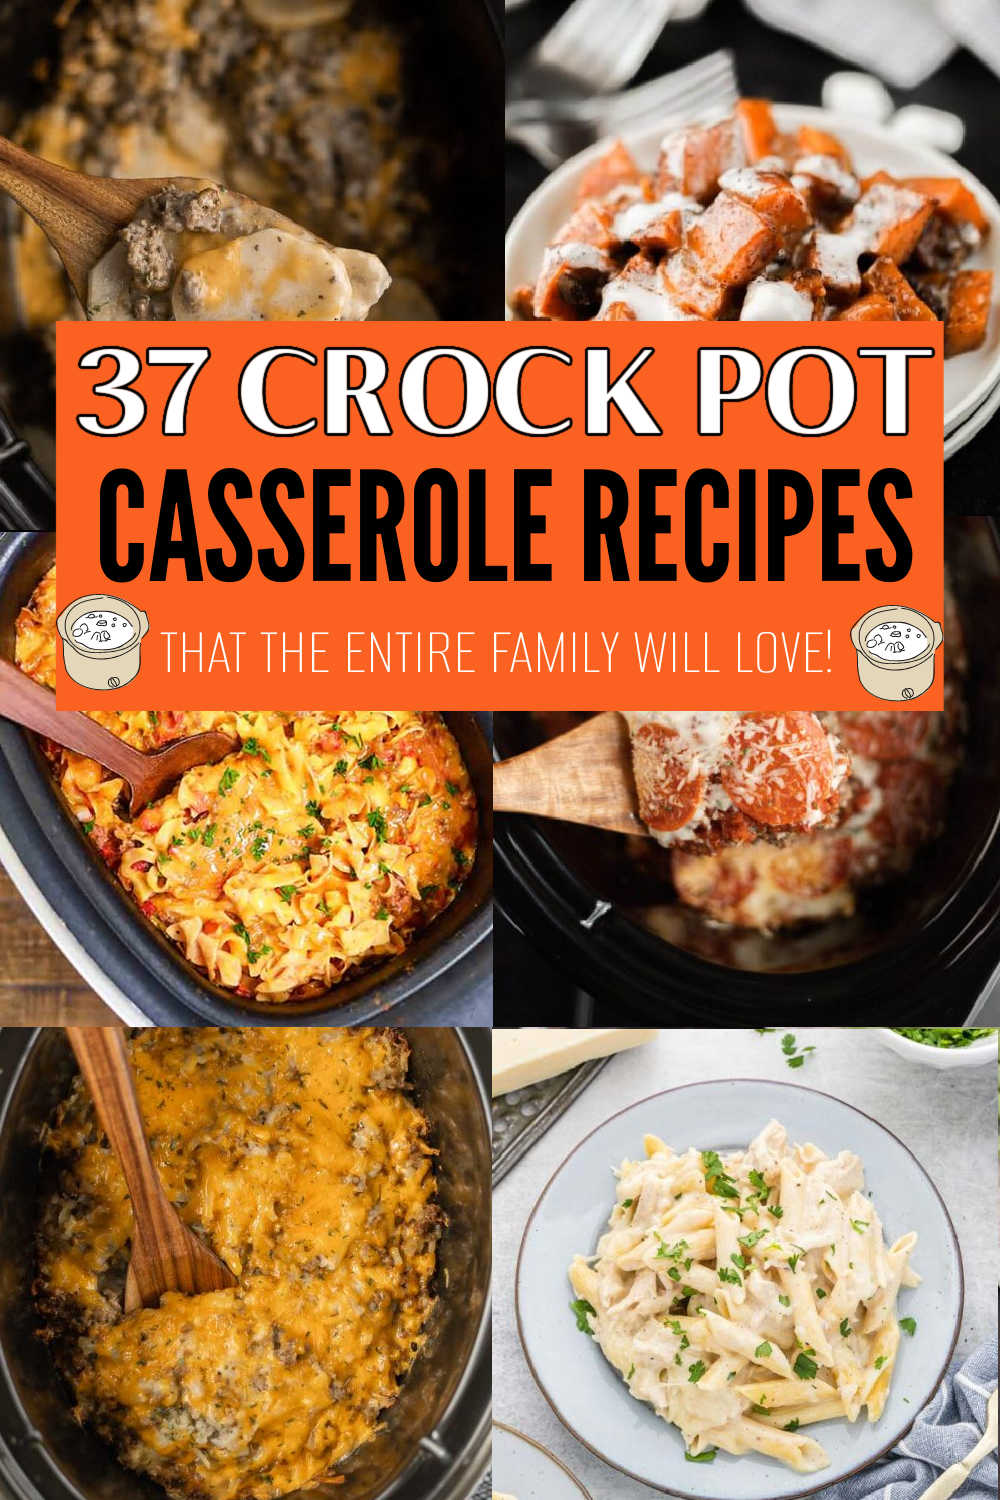 https://www.eatingonadime.com/wp-content/uploads/2022/11/Crock-Pot-Casserole-Recipes-low.jpg